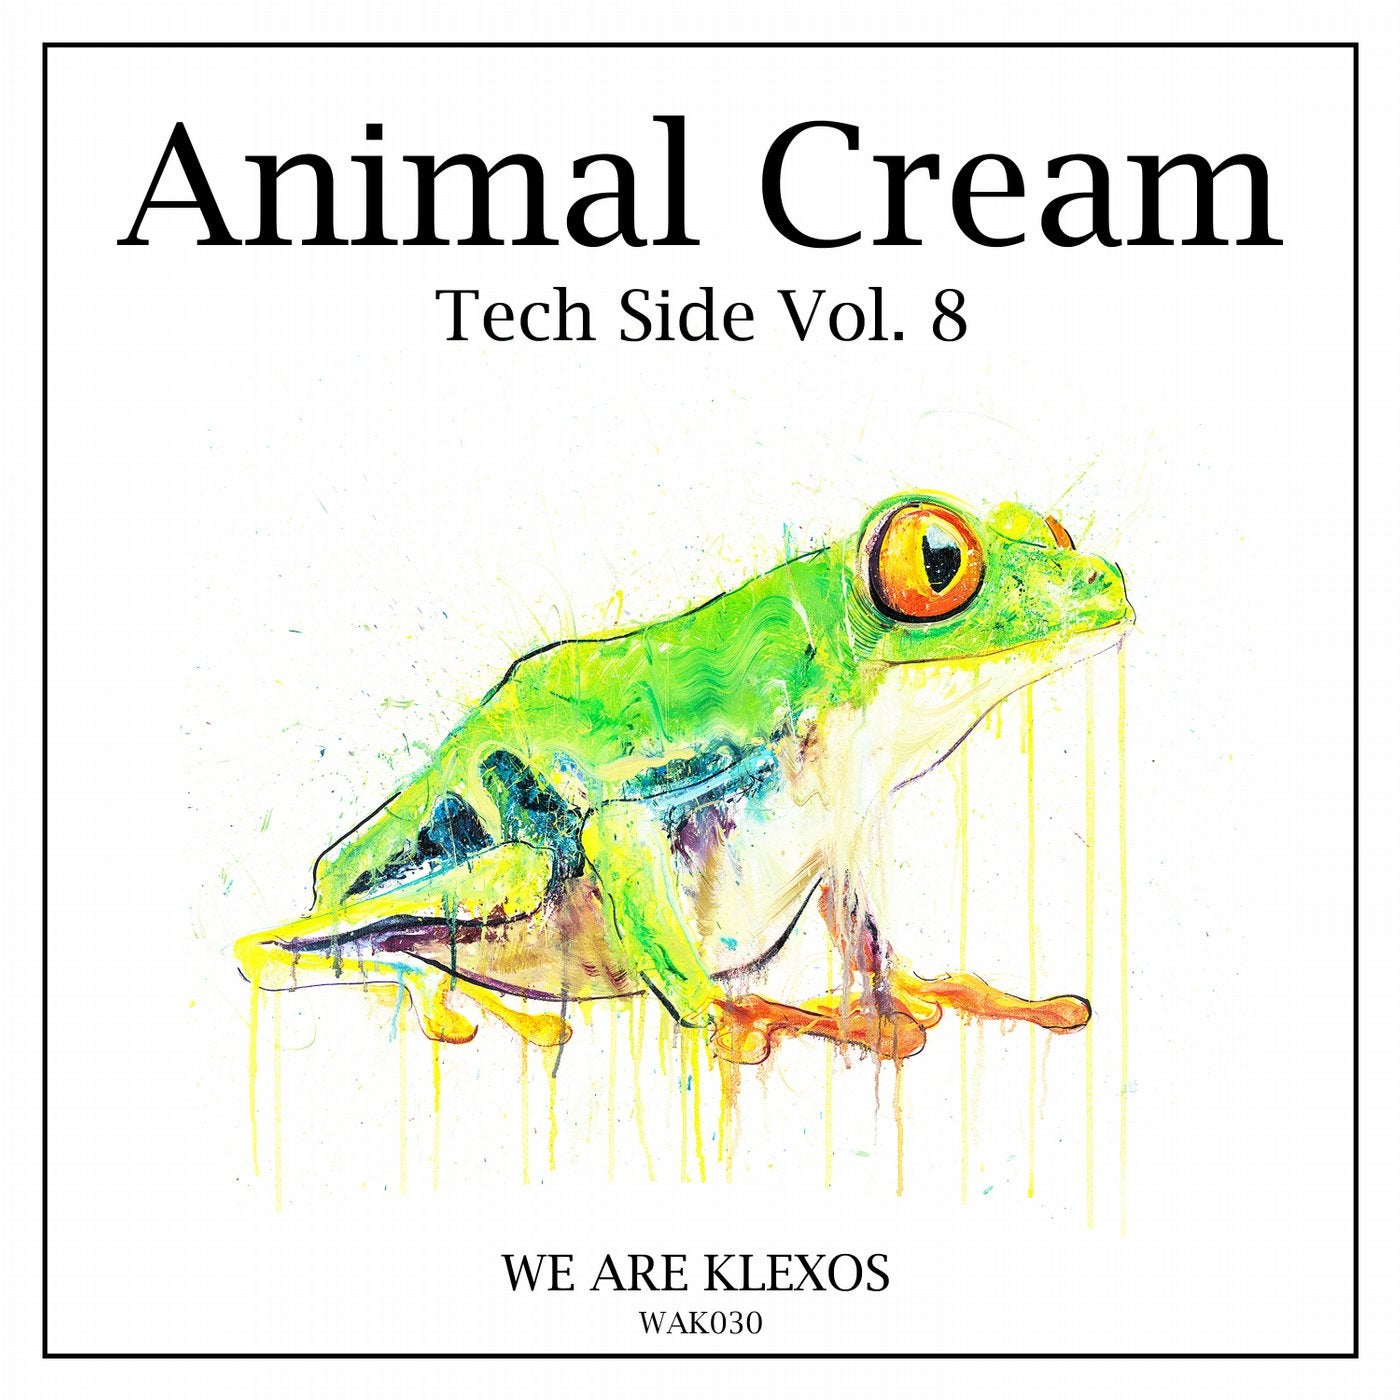 Animal Cream Tech Side, Vol. 8